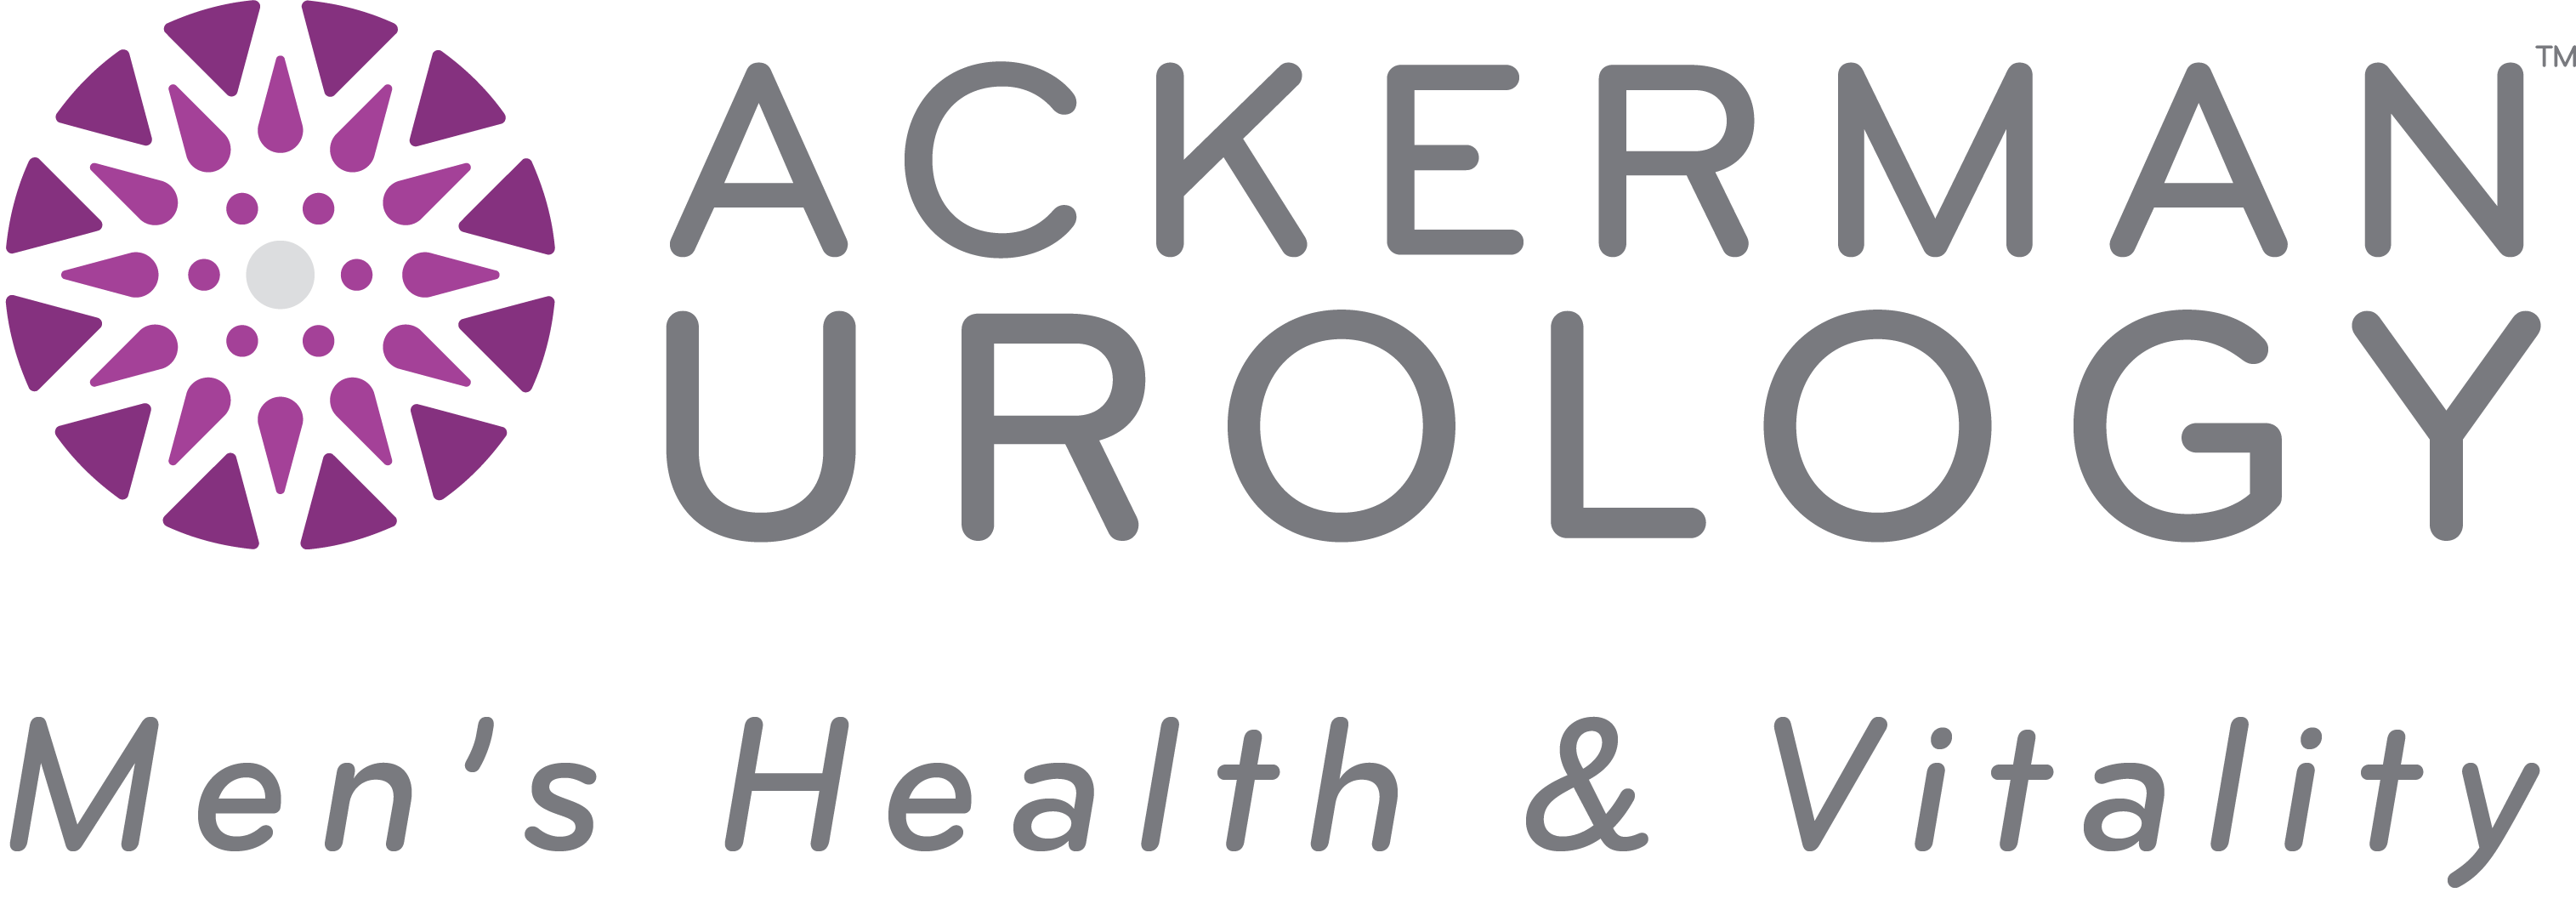 Ackerman Urology Logo